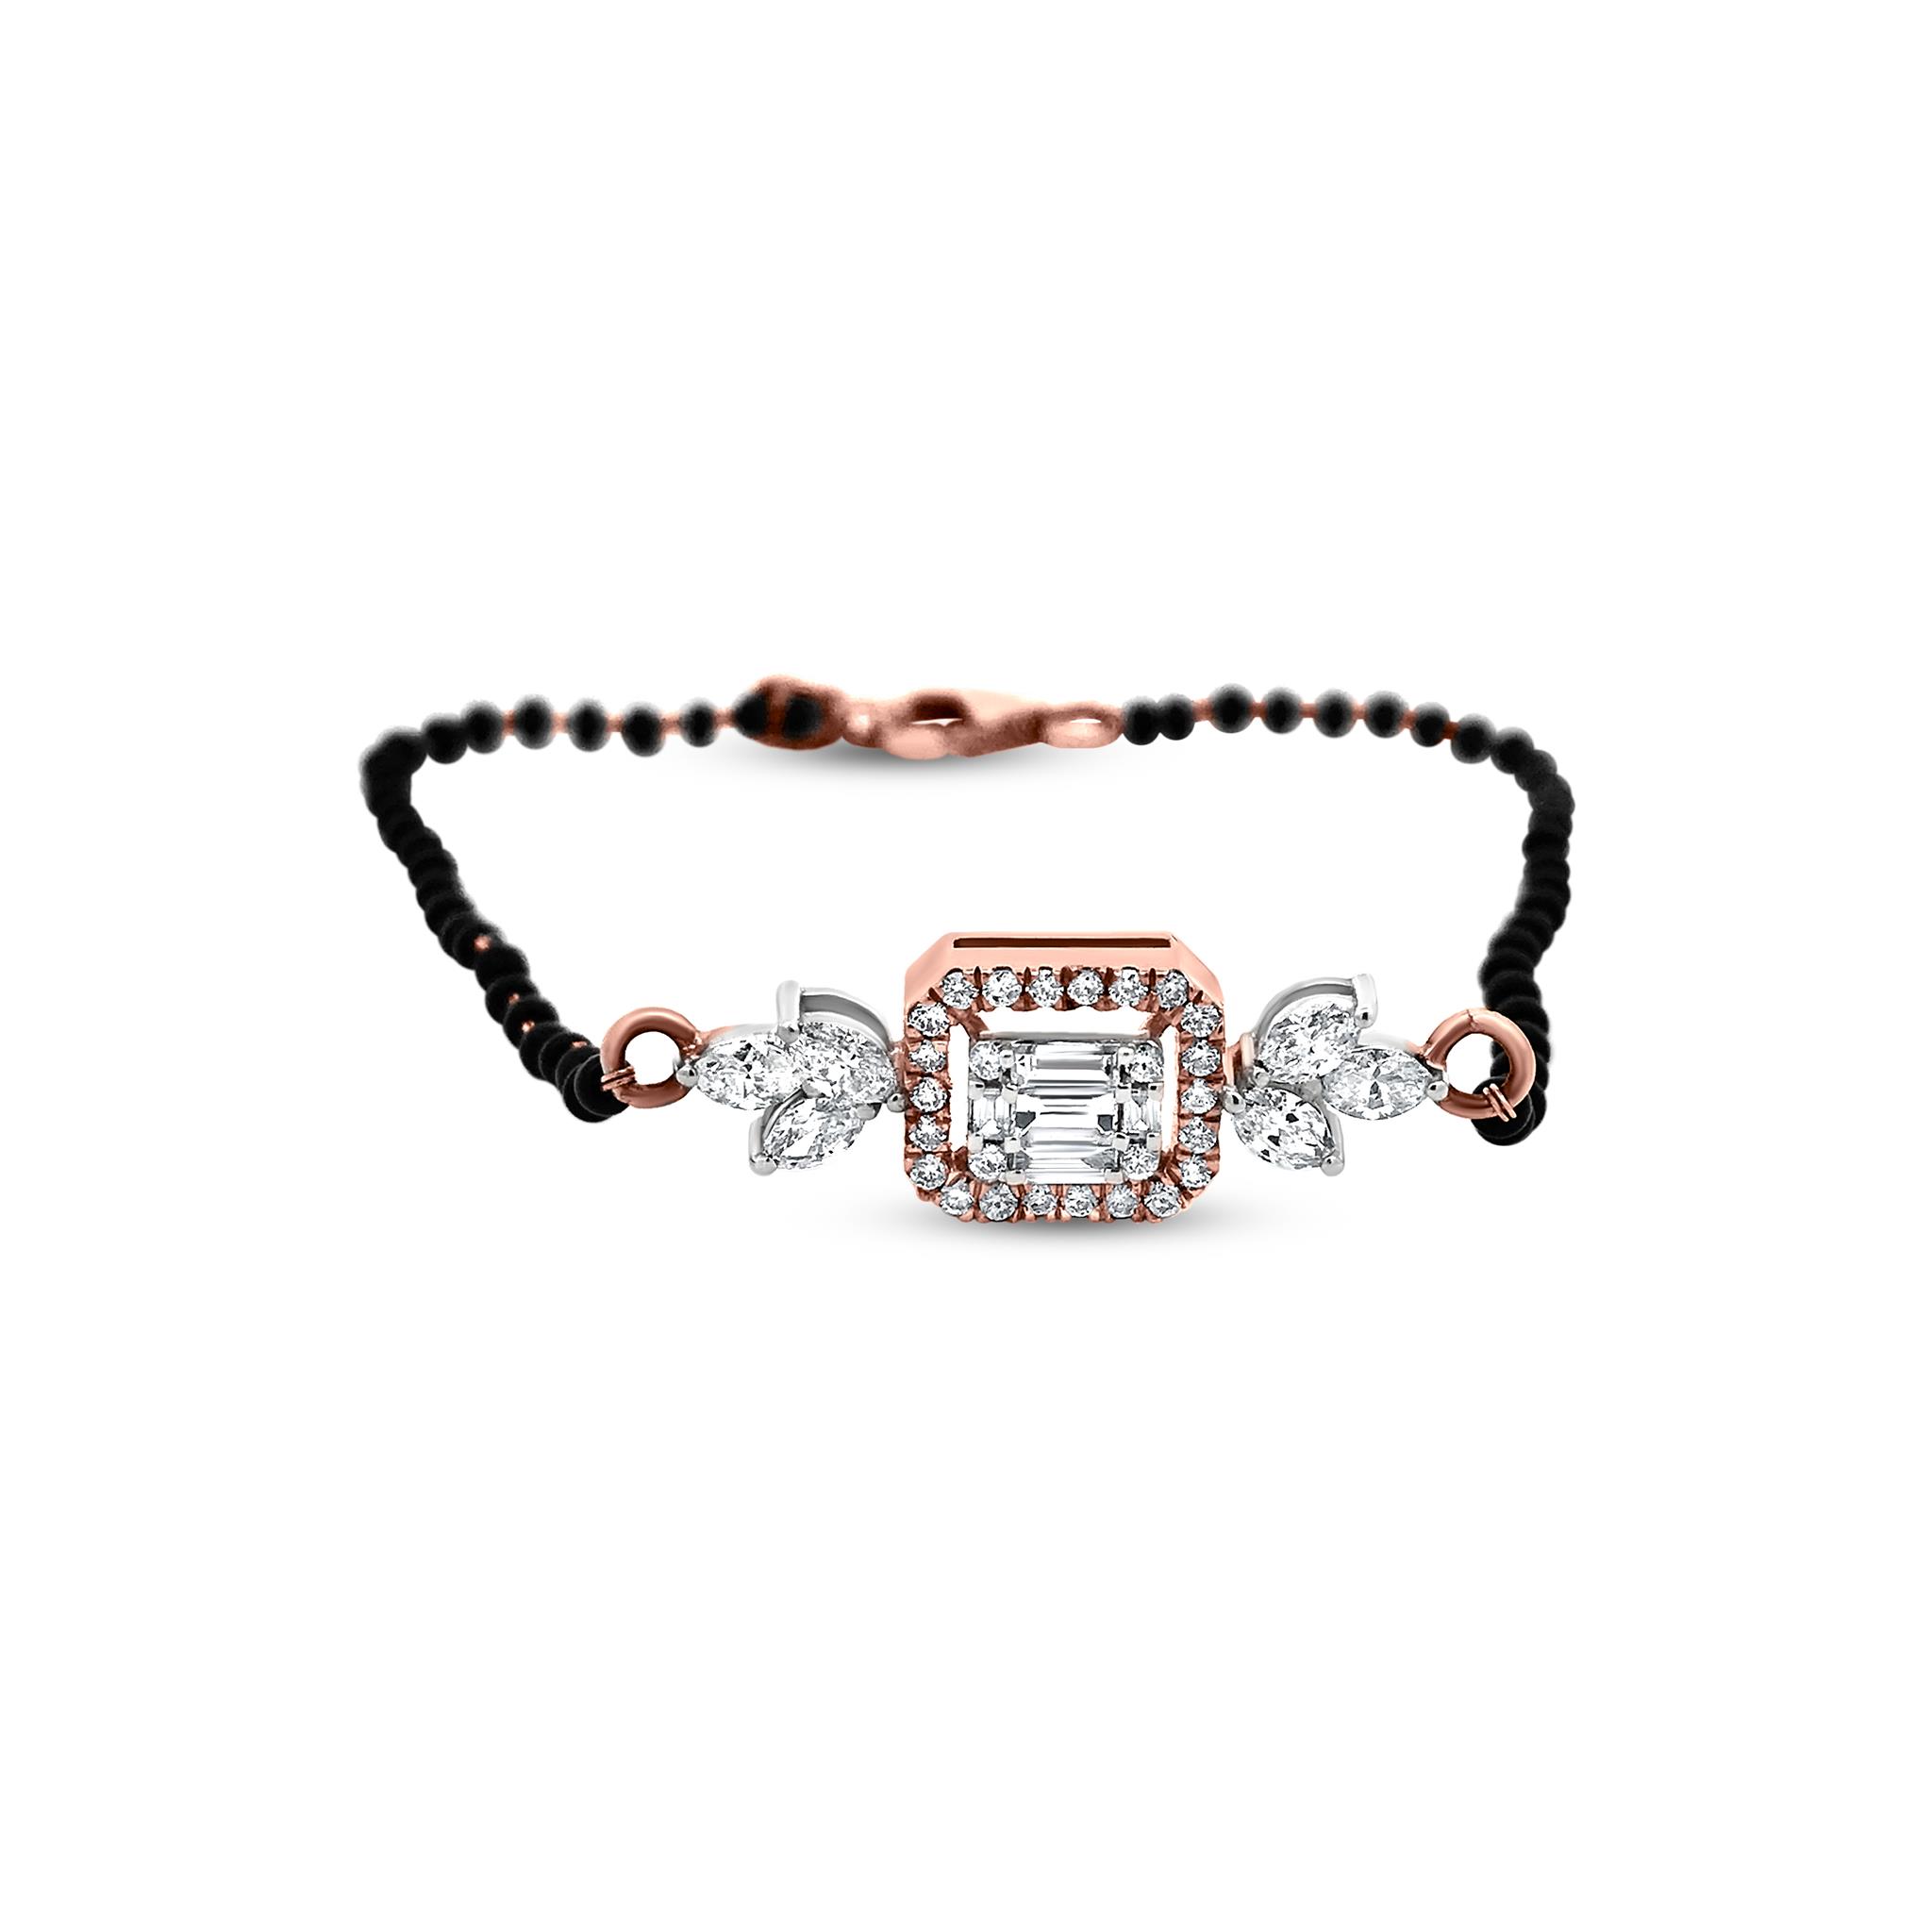 Zoe Chicco Curb Chain Bolo Bracelet | Skeie's Jewelers